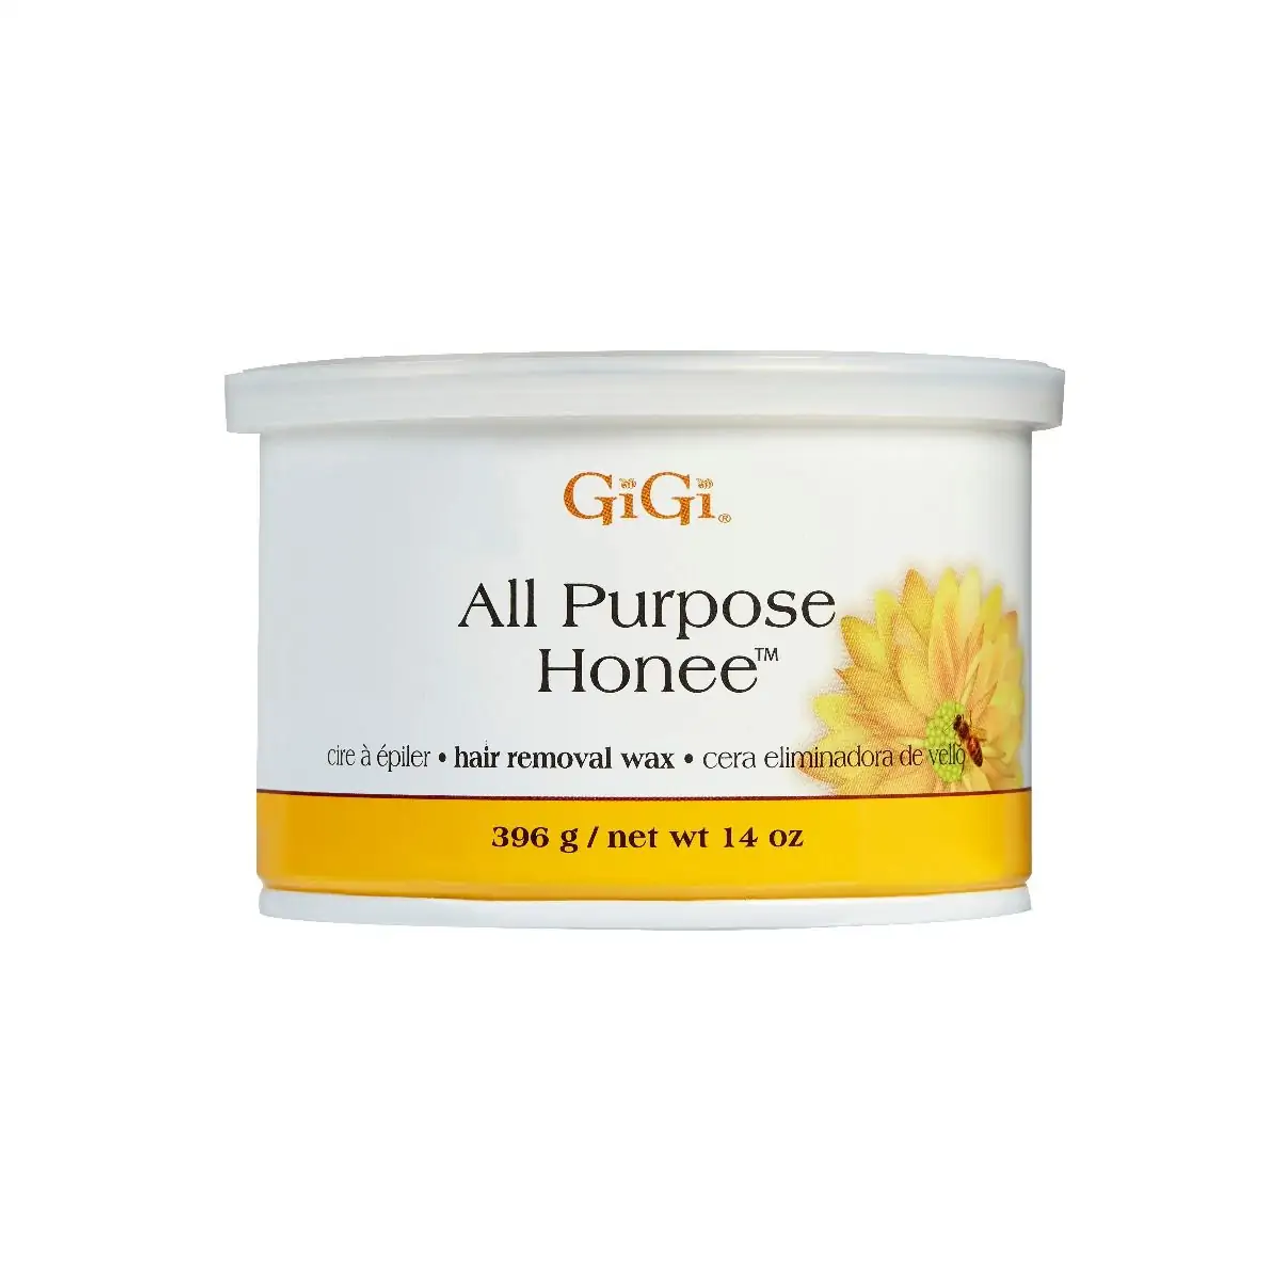 GiGi All Purpose Honee Hair Removal Wax